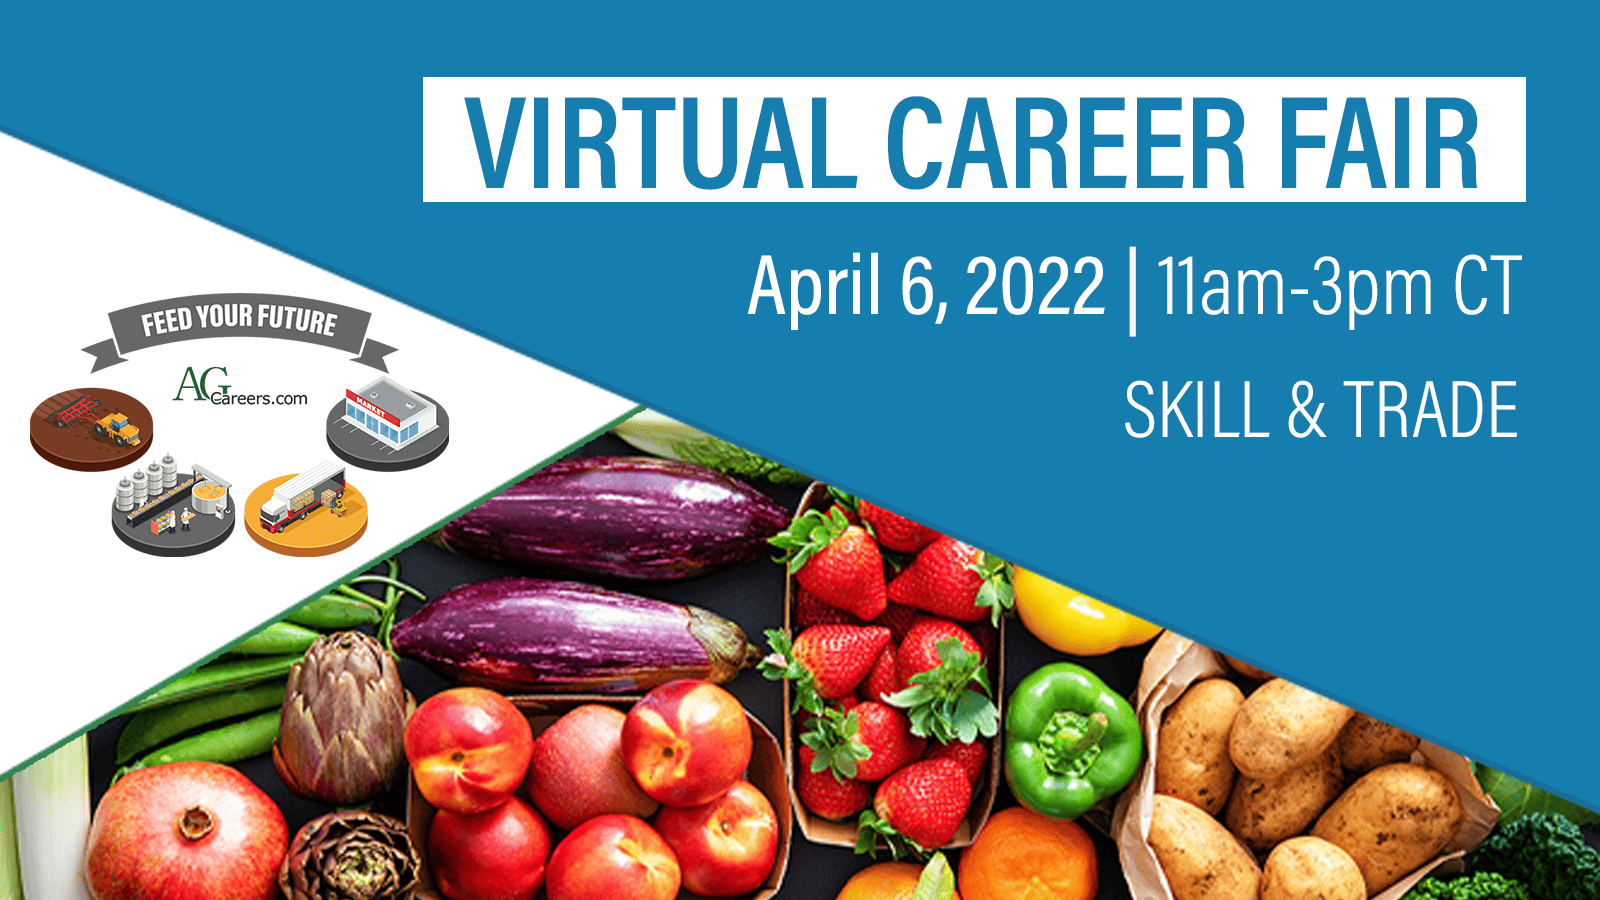 #FeedYourFutrure Virtual Career Fair - Skill & Trade April 6, 2022 all U.S.A.